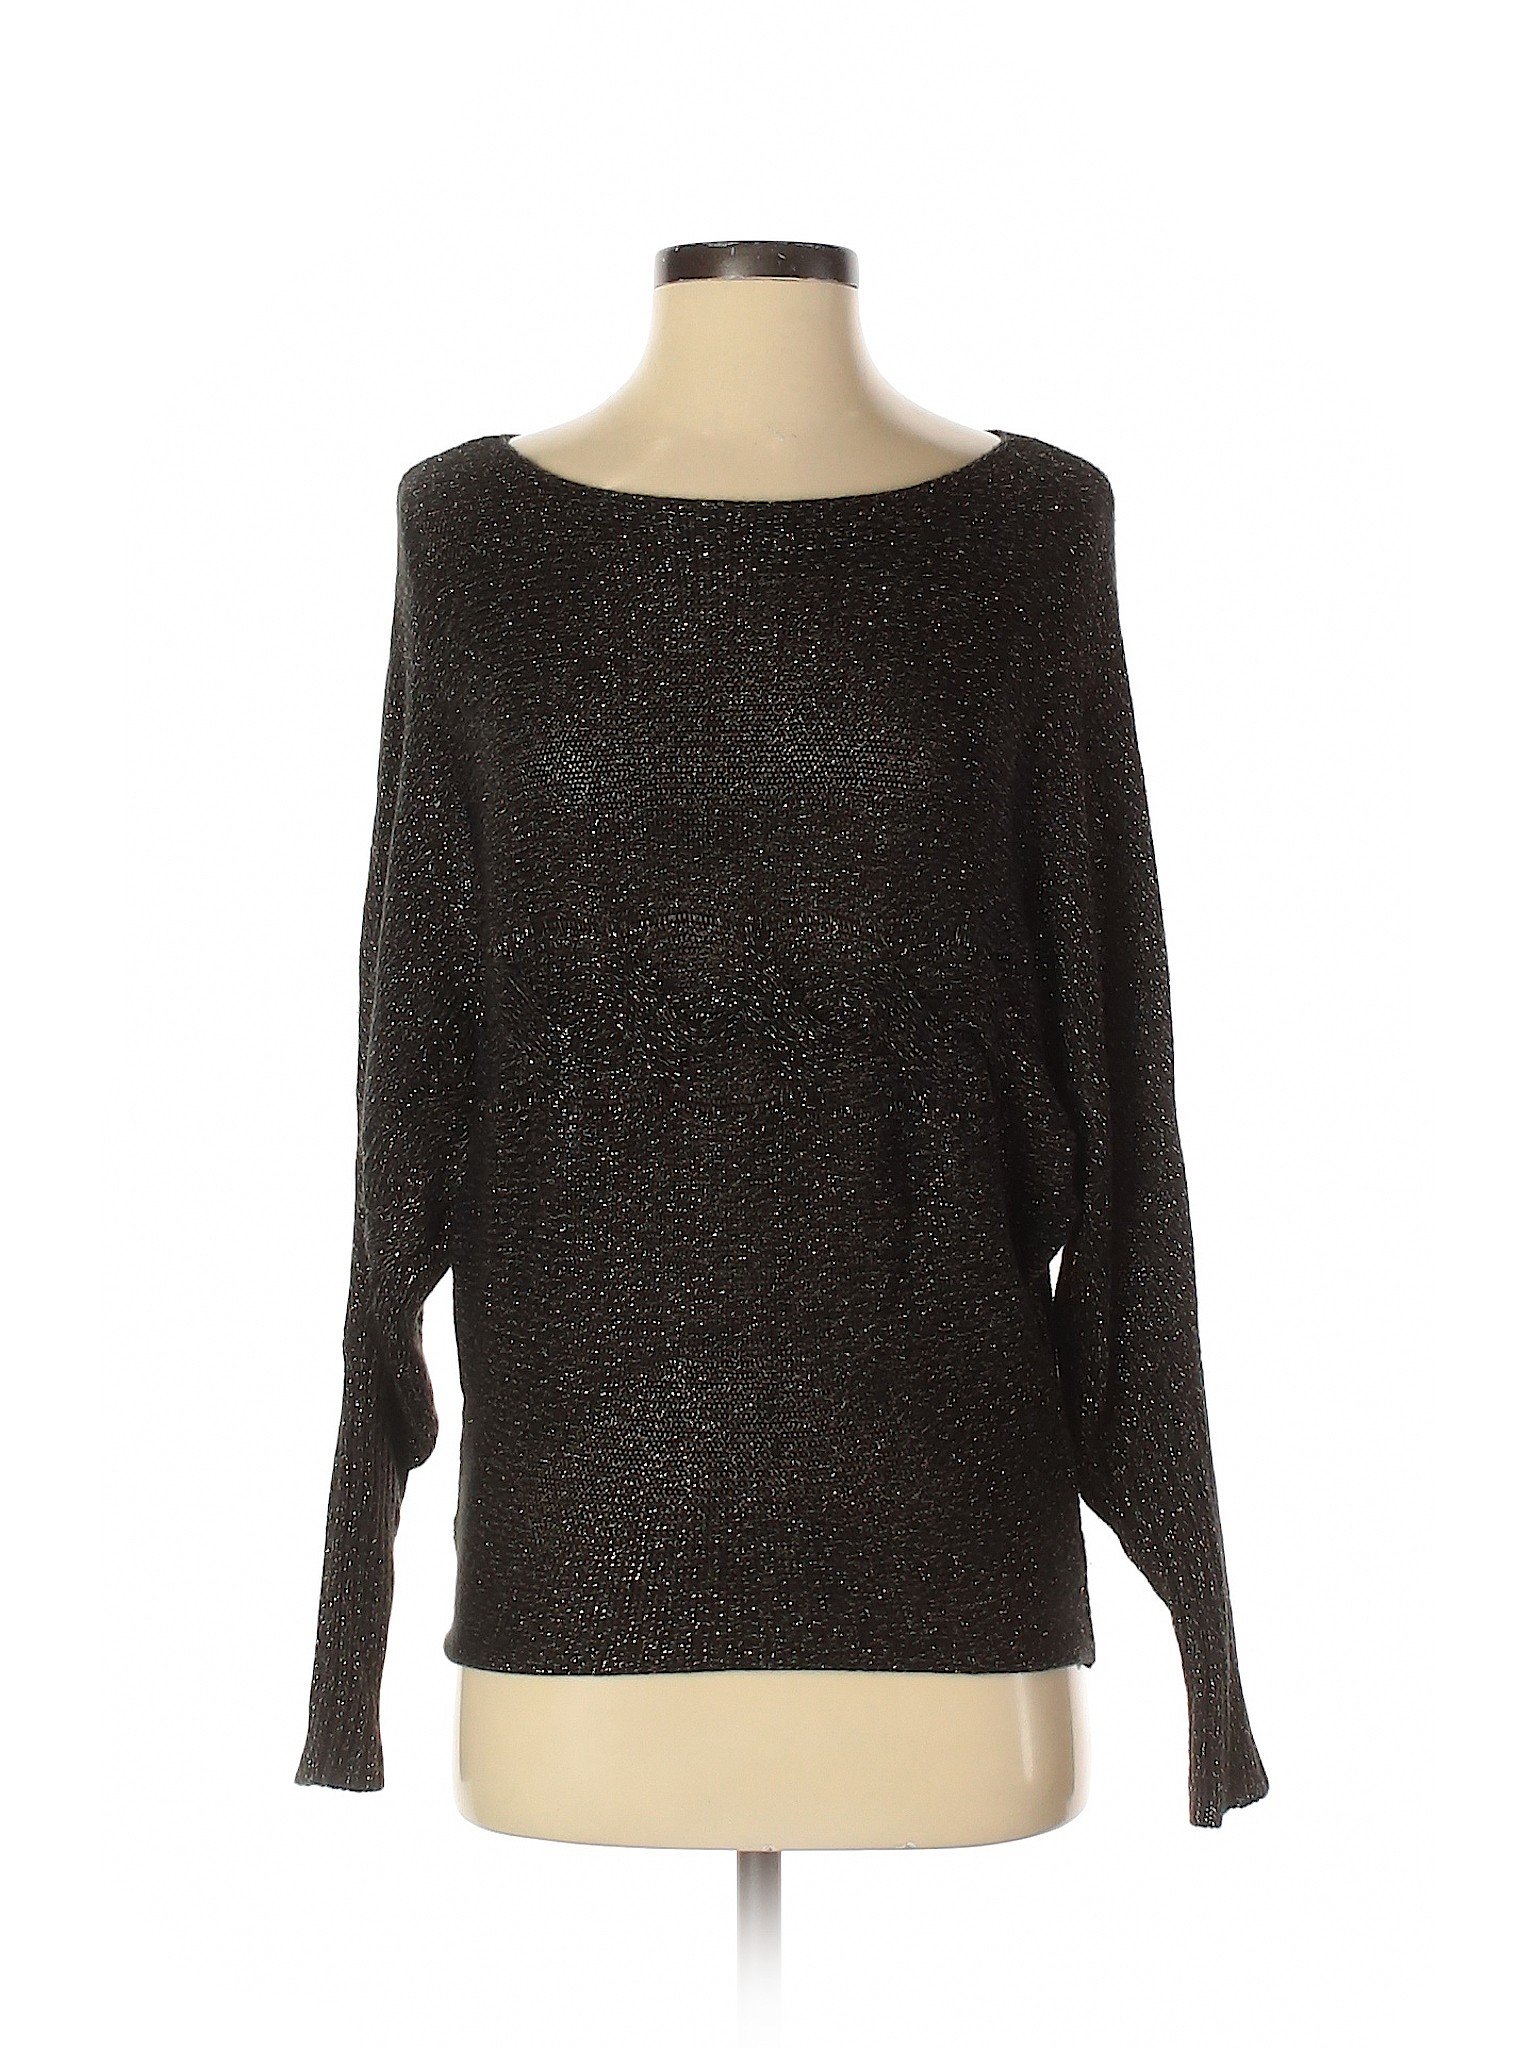 Bisou Bisou Women Black Pullover Sweater XS | eBay